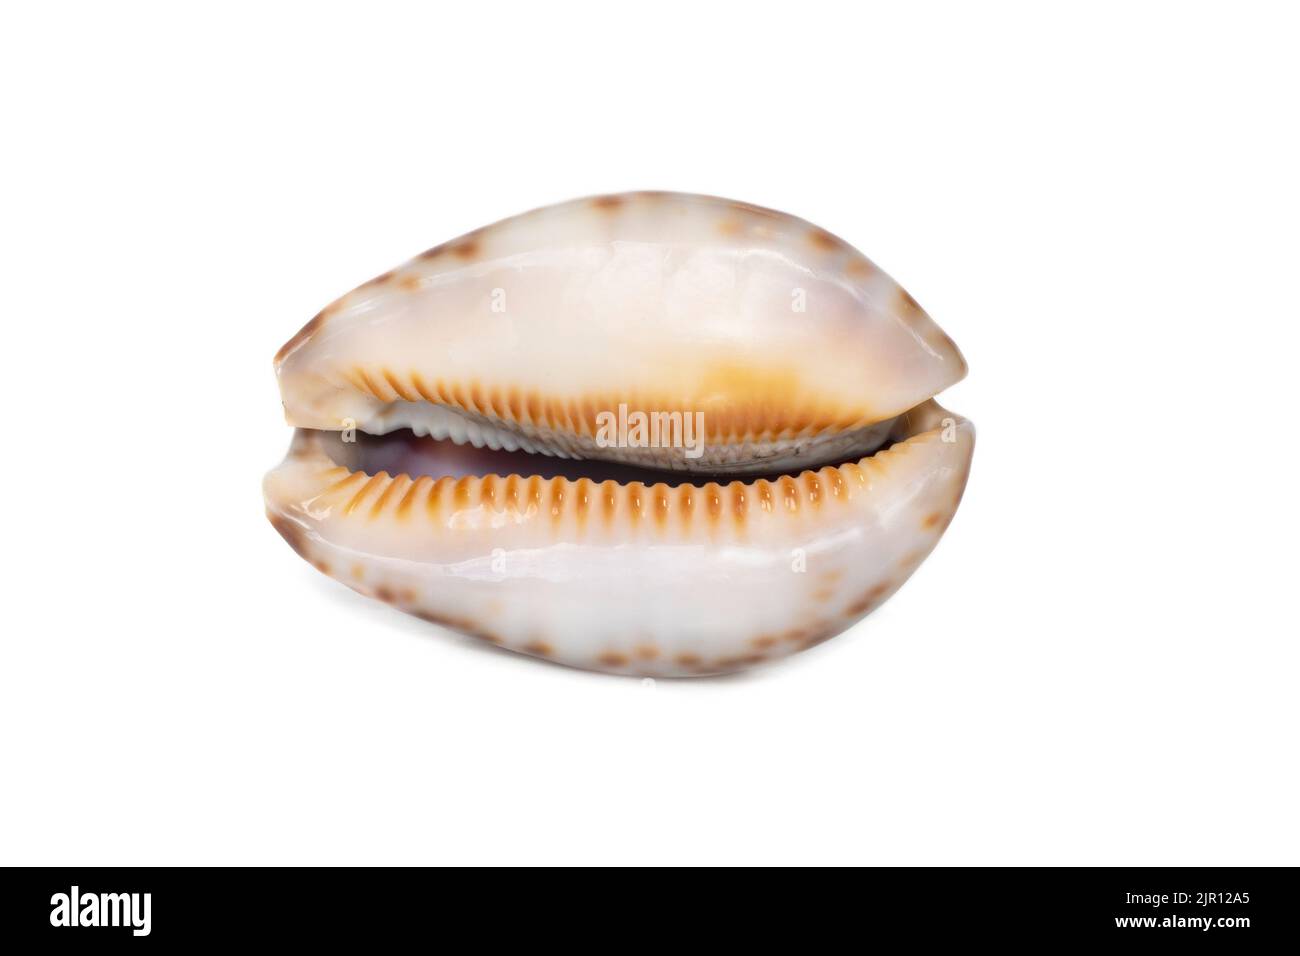 Image of seashells cypraea arabica on a white background. Undersea Animals. Sea Shells. Stock Photo